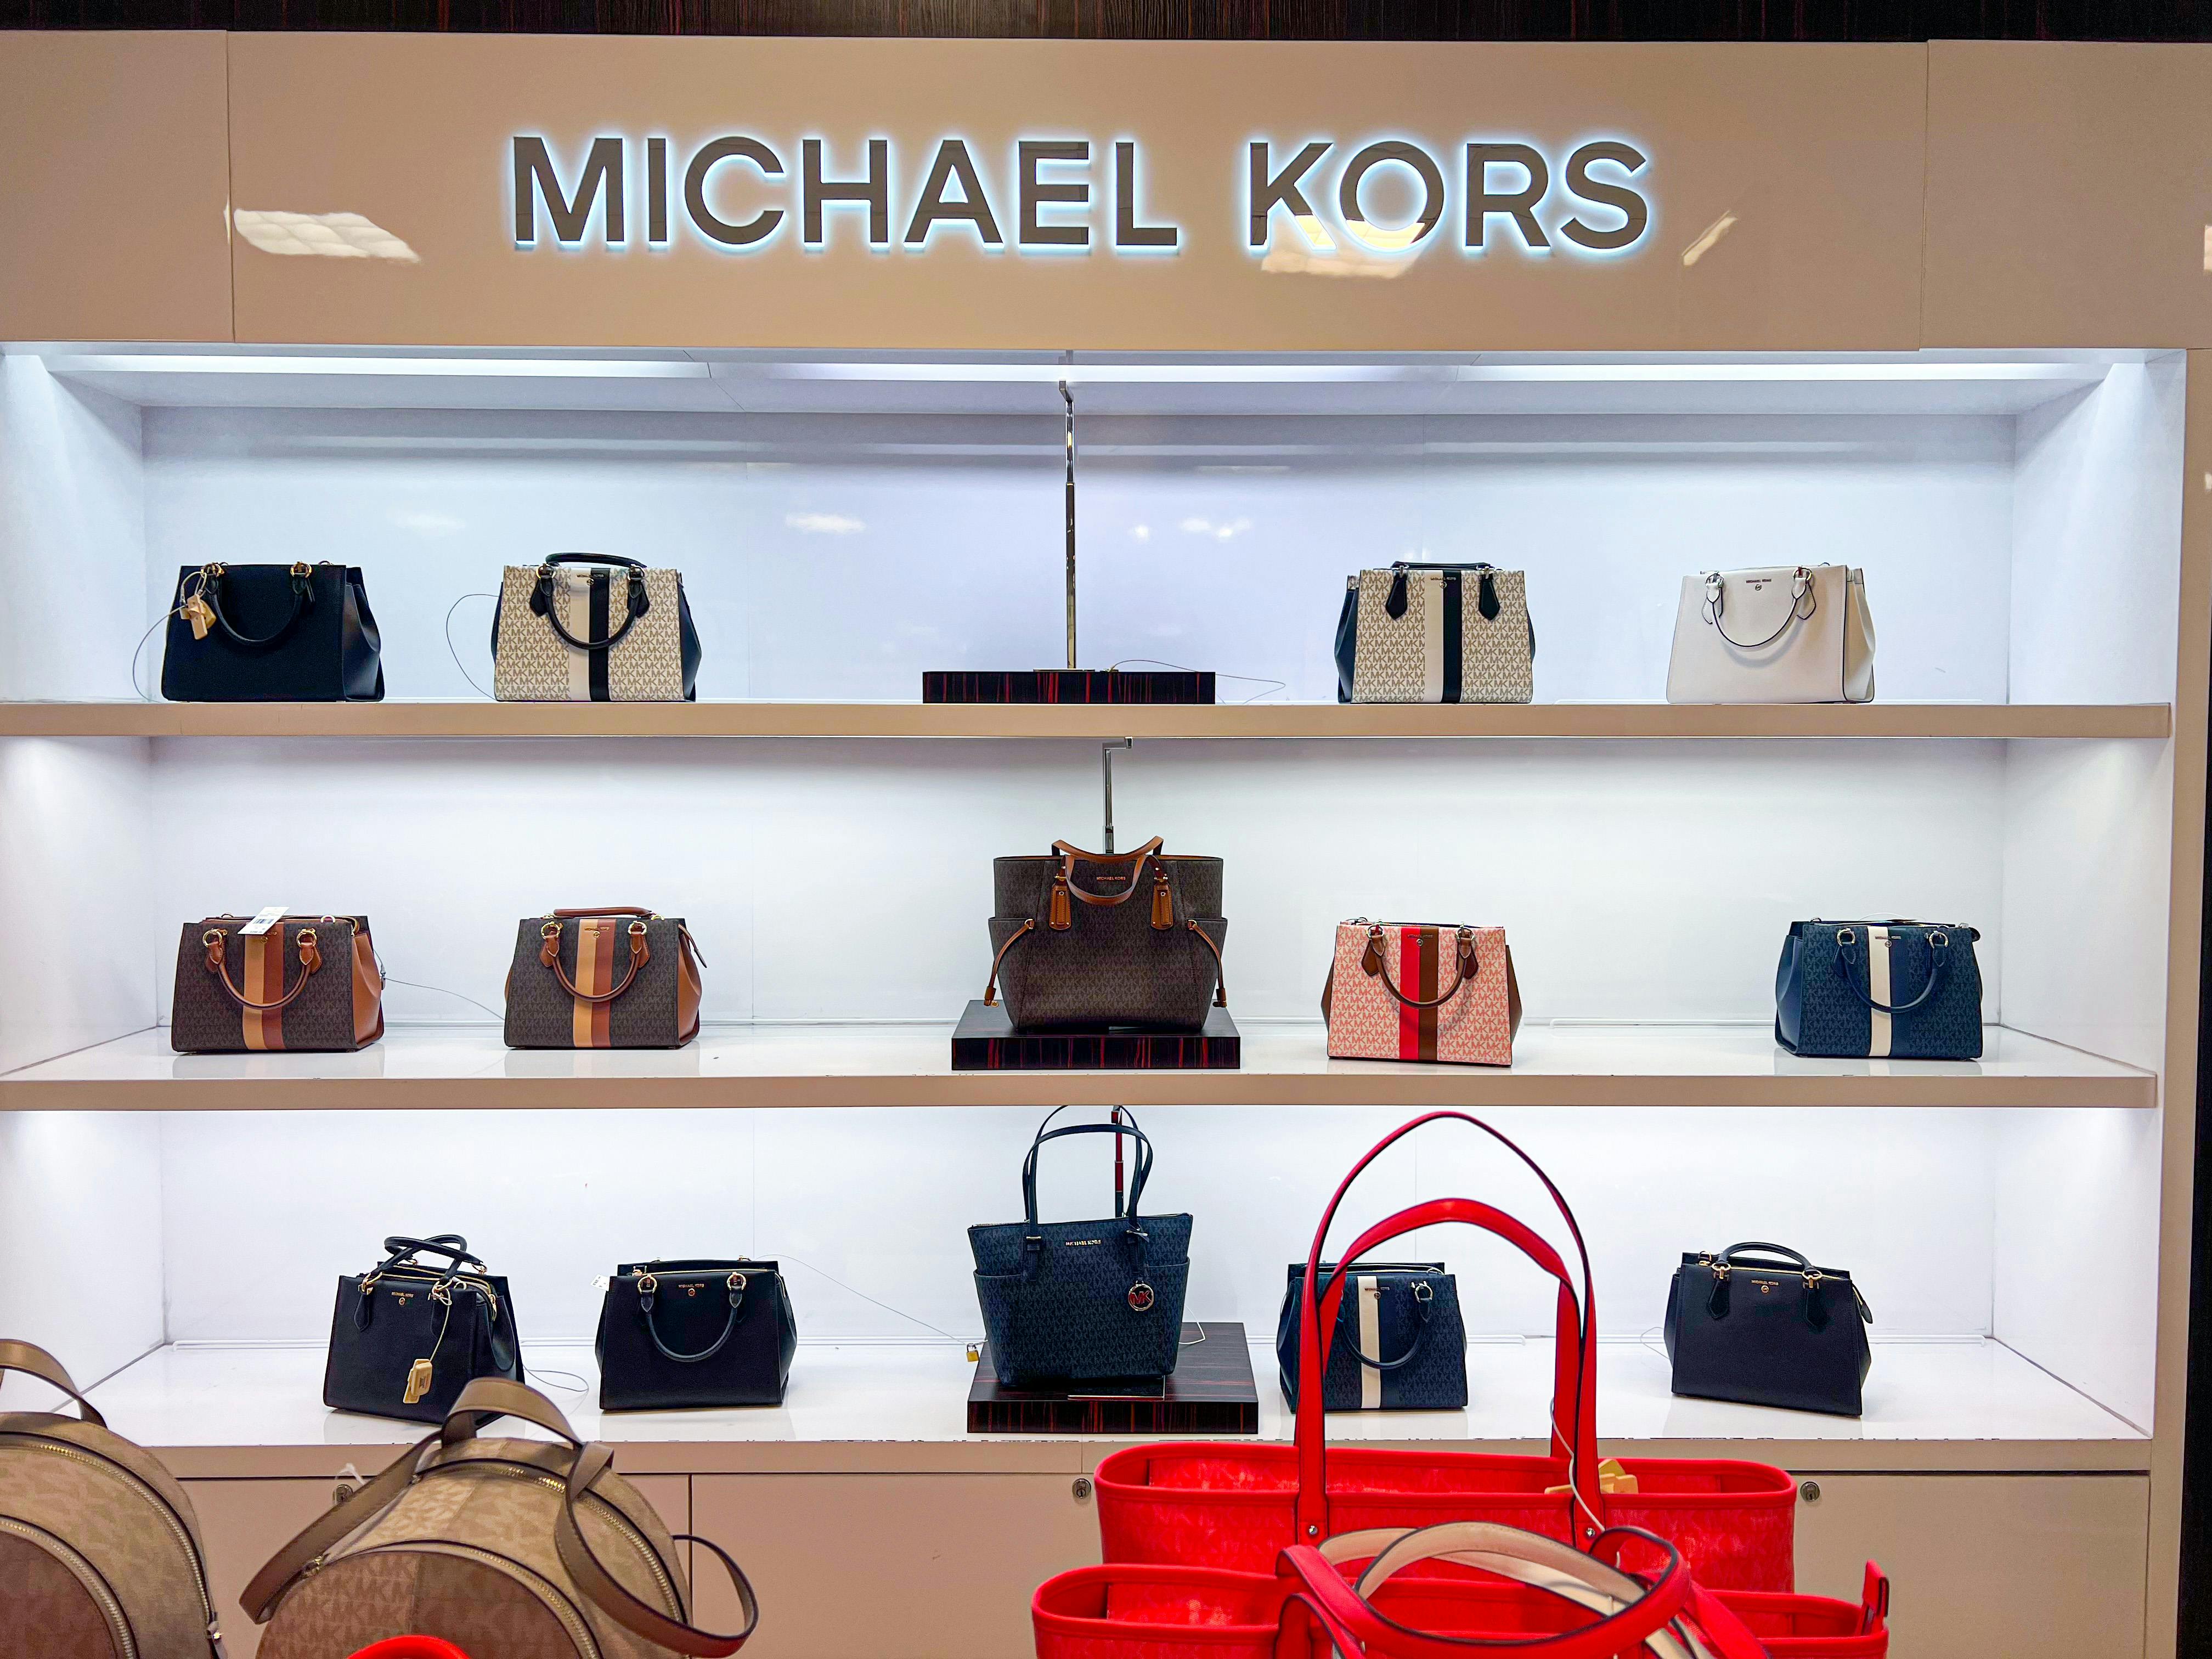 Michael Kors Outlet! New Shop with Me! Sale! 70% plus 20% off